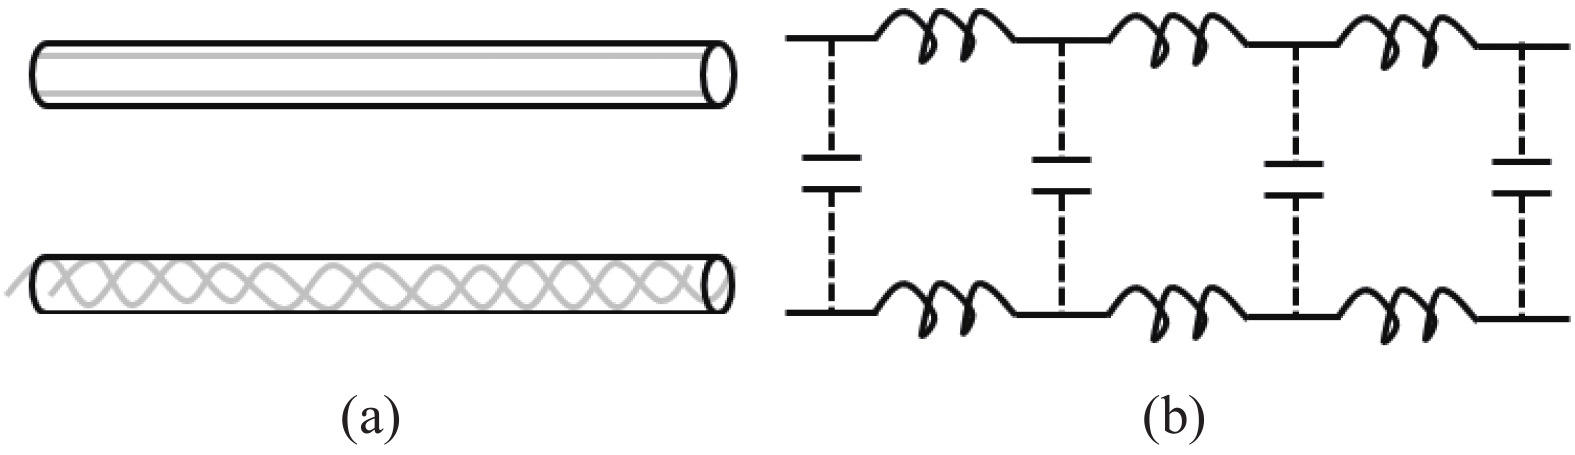 RF transmission line equivalent circuit